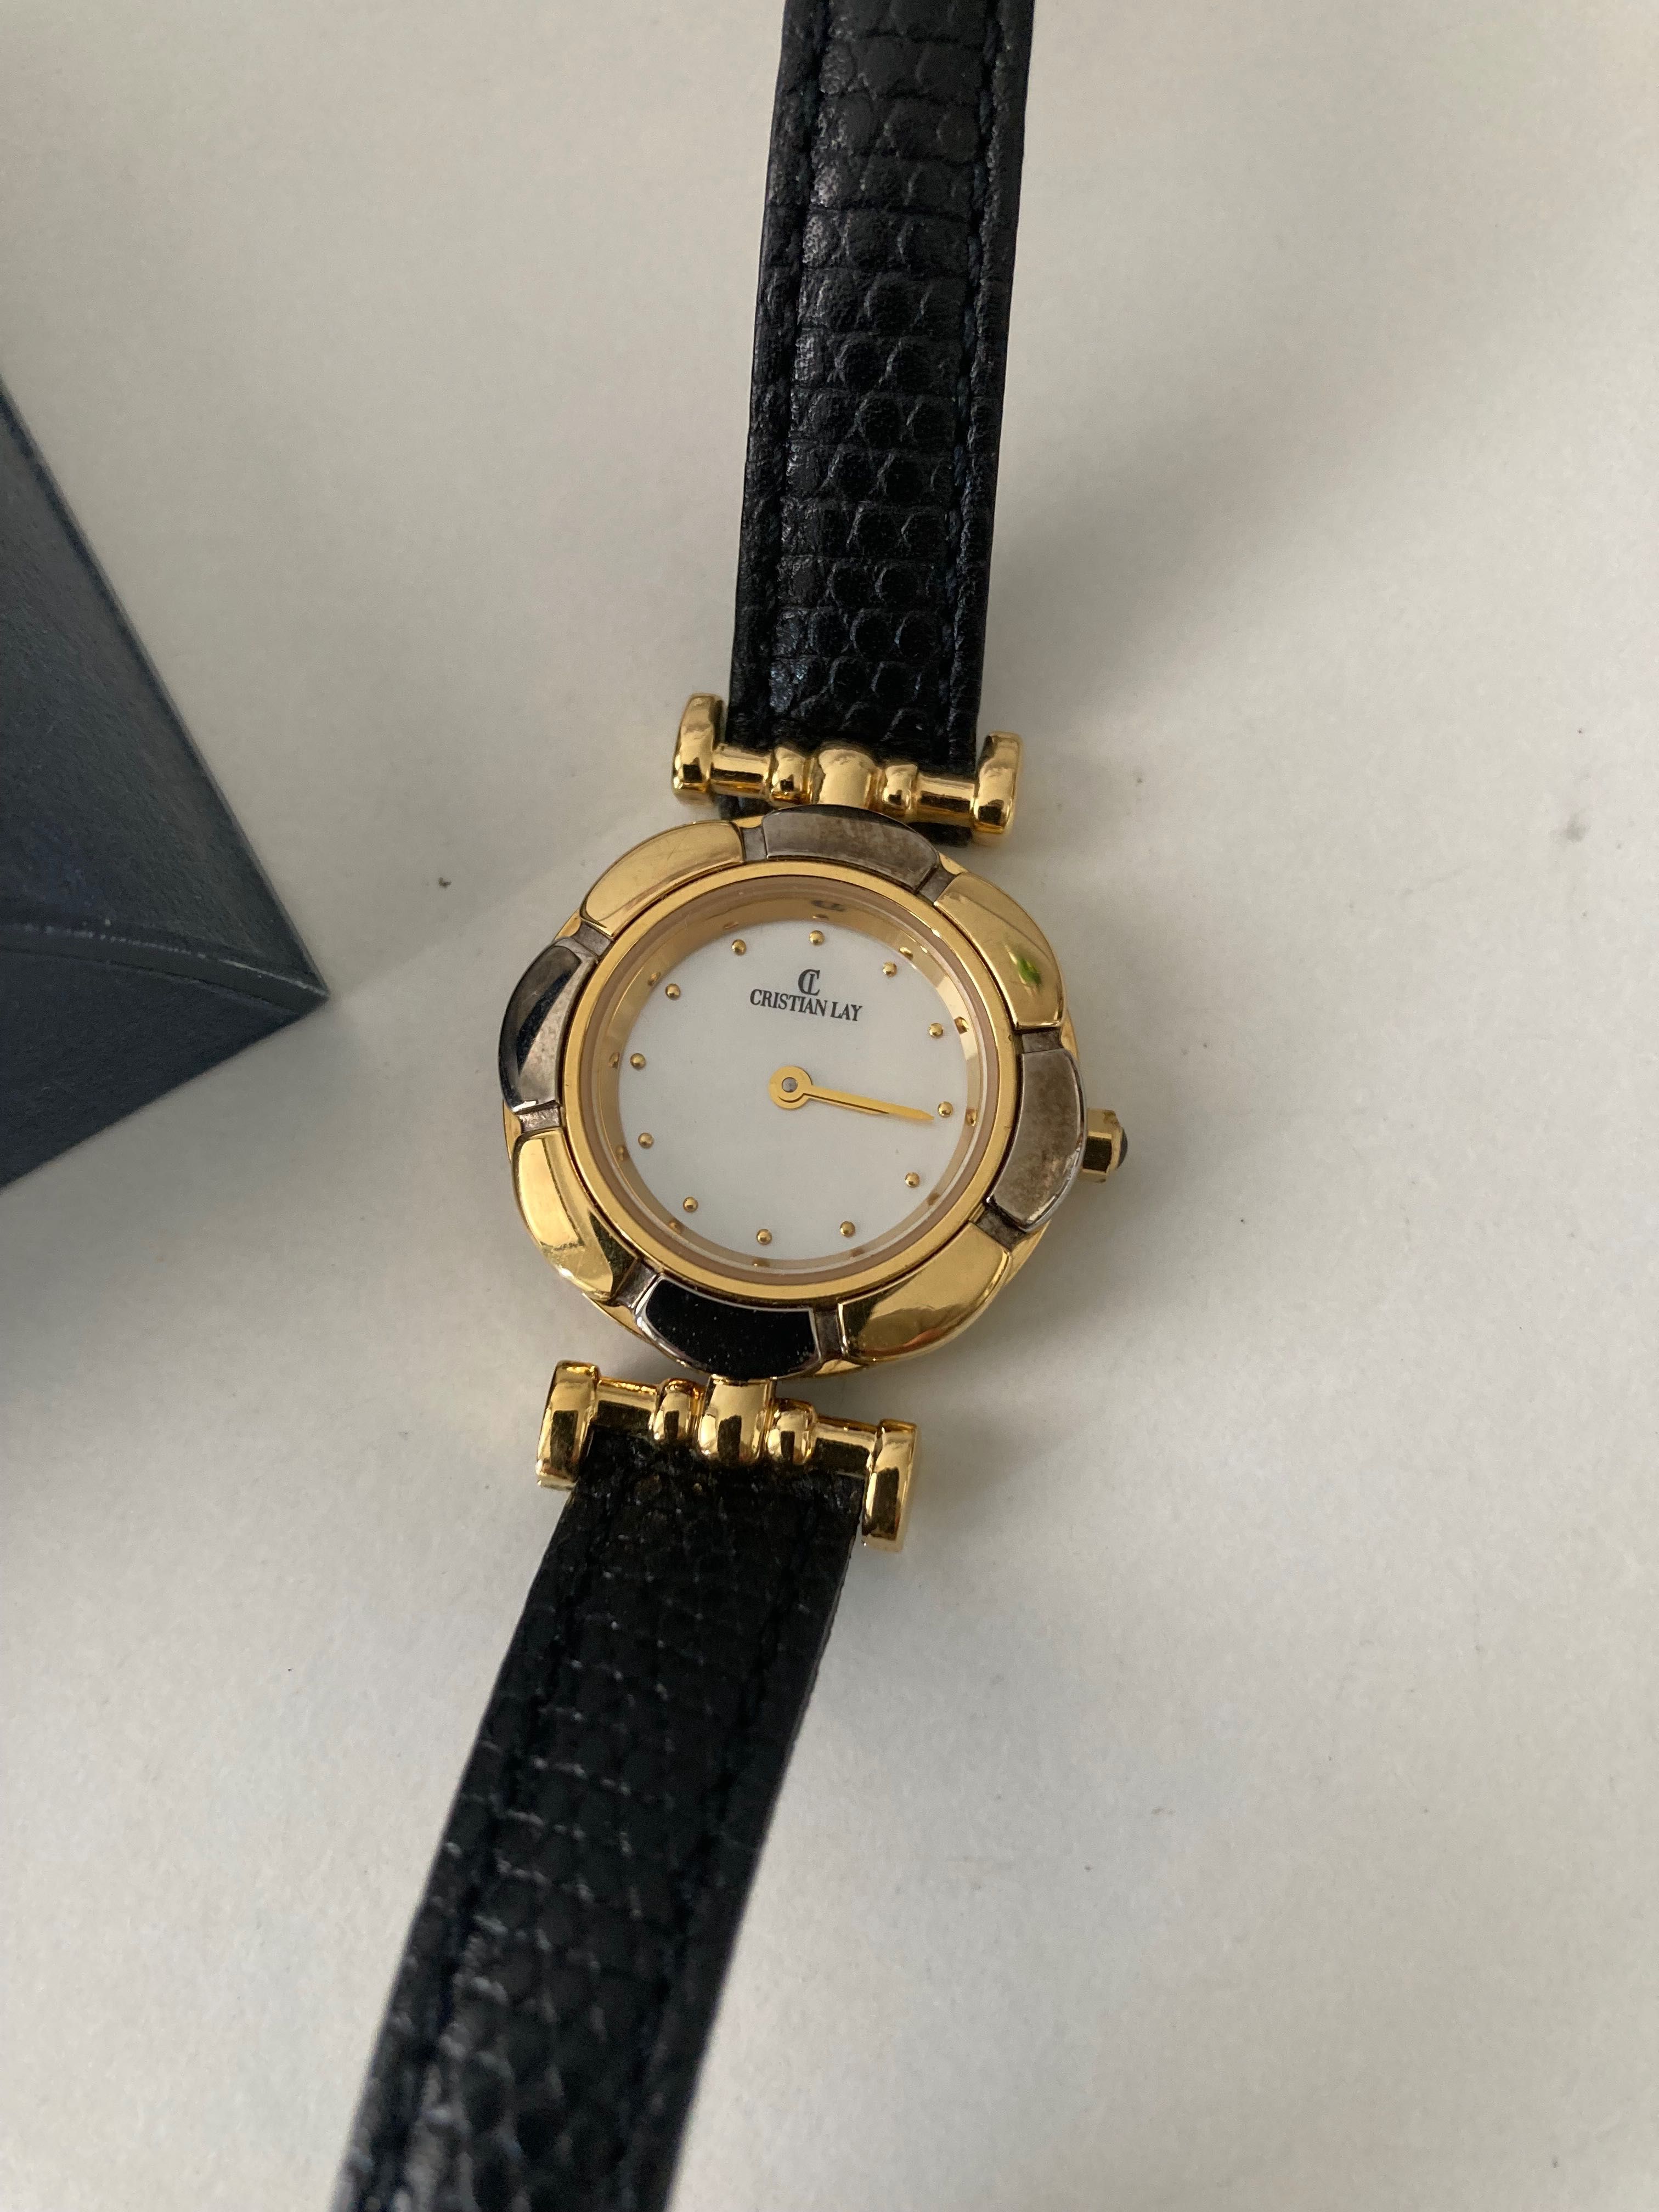 Relógio Pulso Senhora - Cristian Lay - Vintage - Como Novo